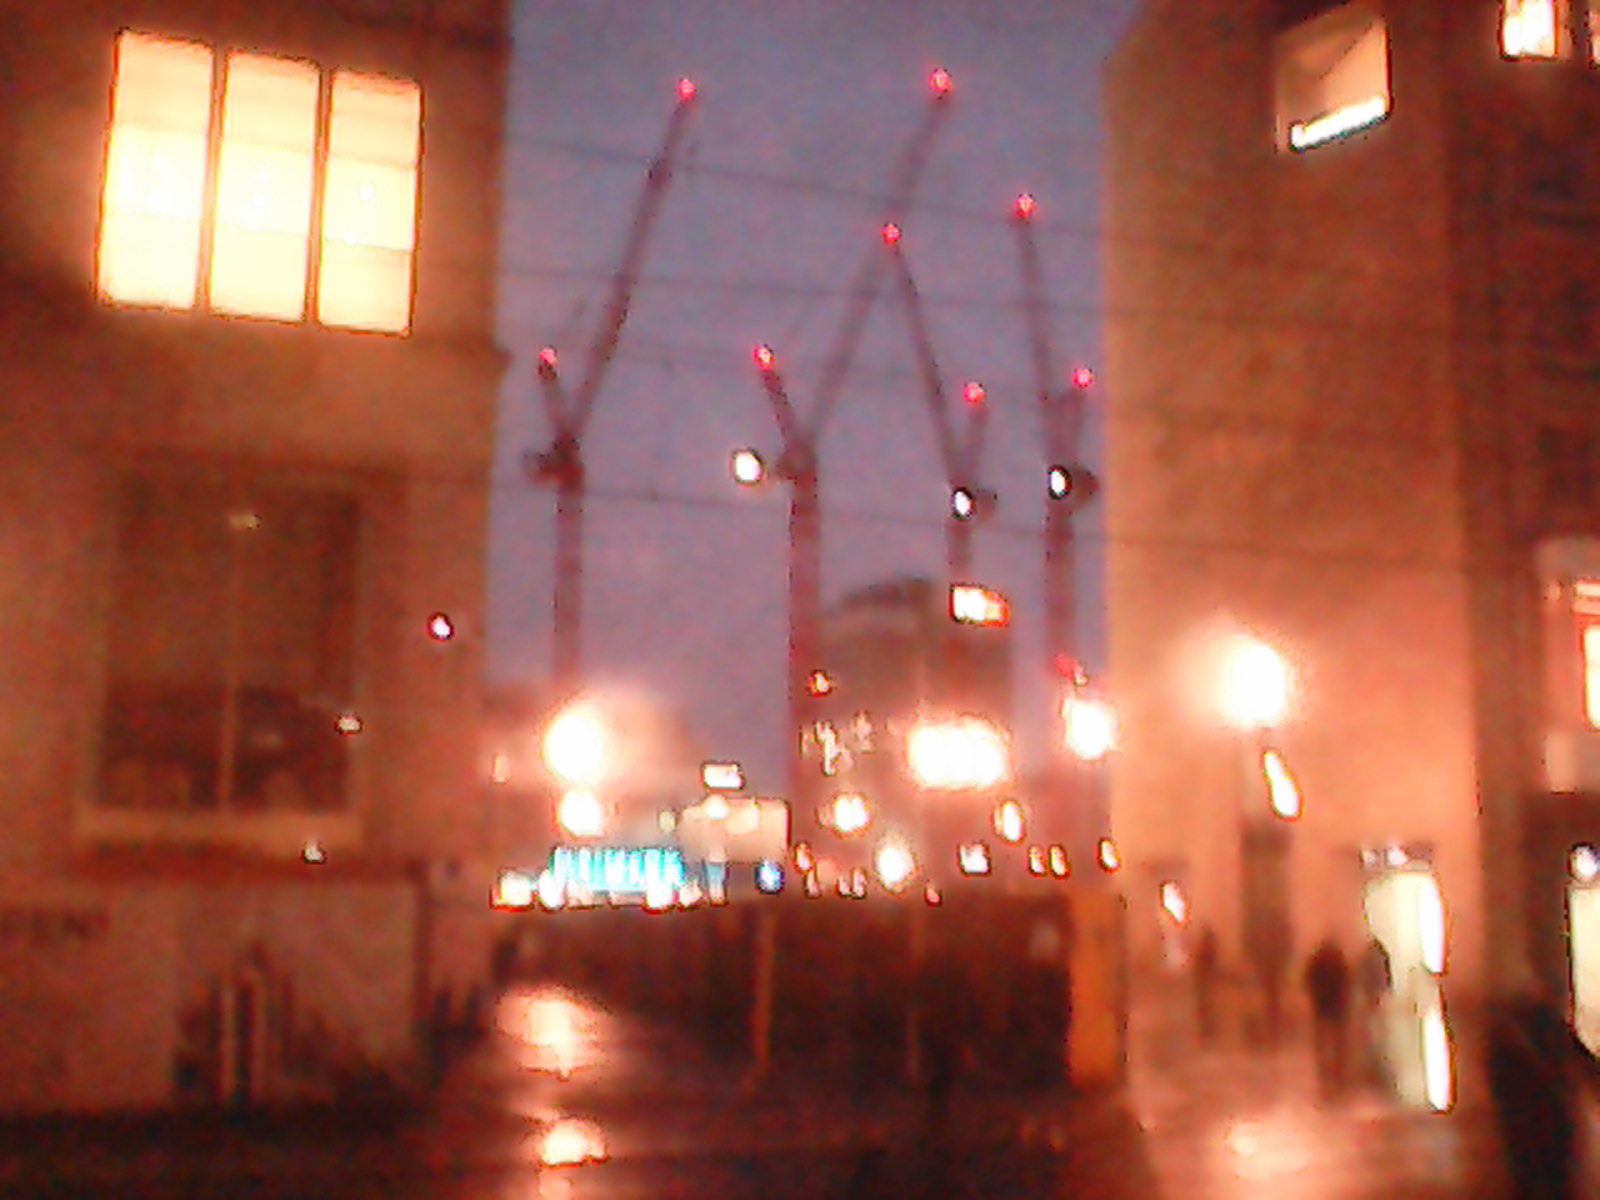 Cranes in a city